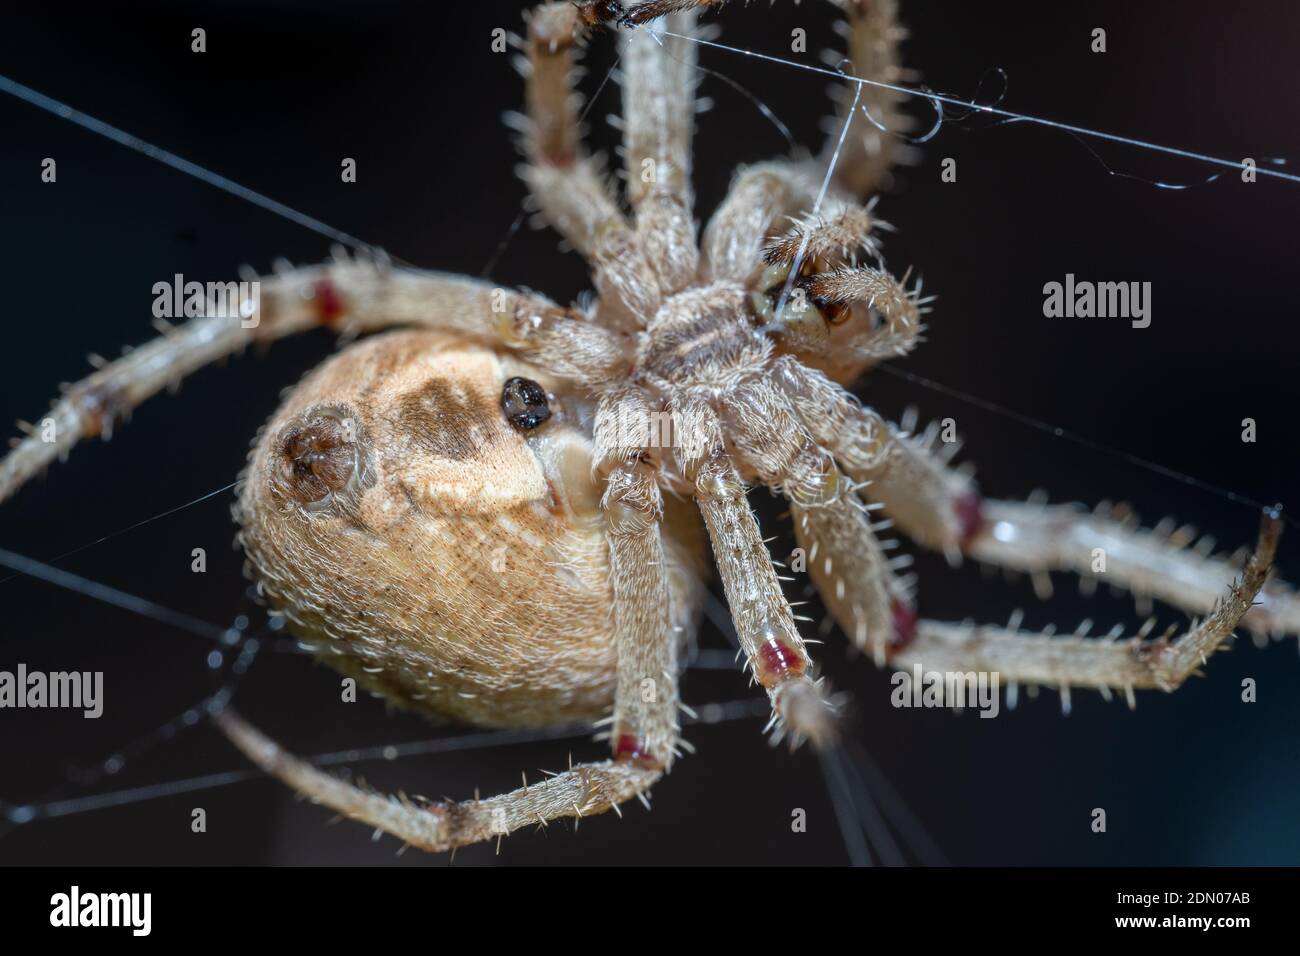 Common Hairy Field Spider (Neoscona subfusca) macro photography at night underside view of web, Stock Photo